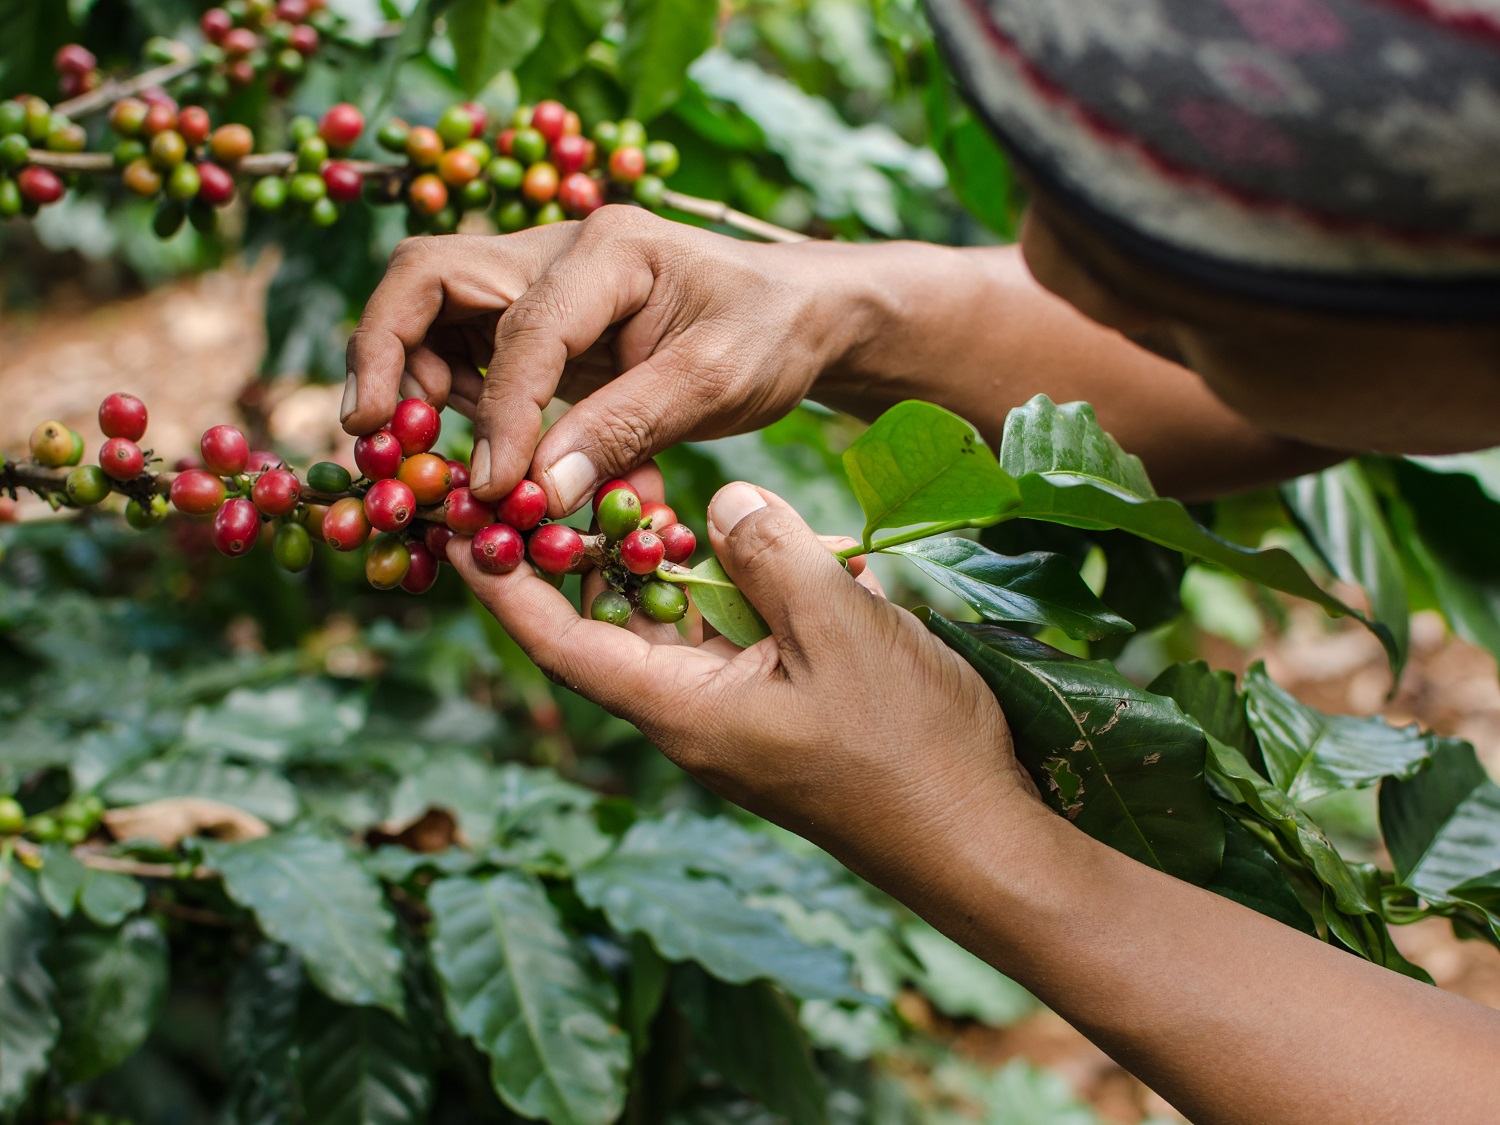 Picking coffee berries. Credit: Shutterstock